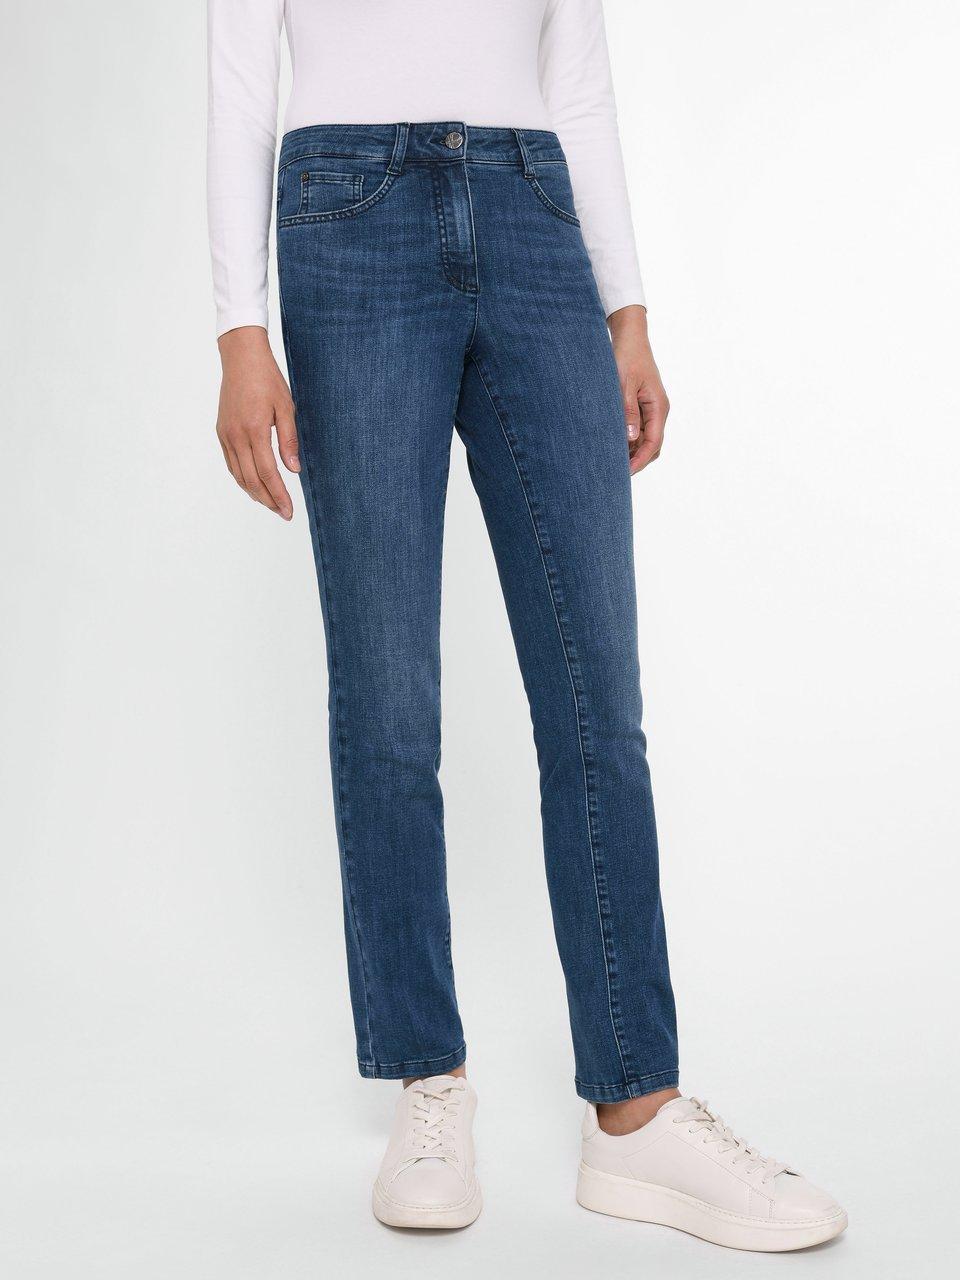 BASLER - Le jean coupe 5 poches